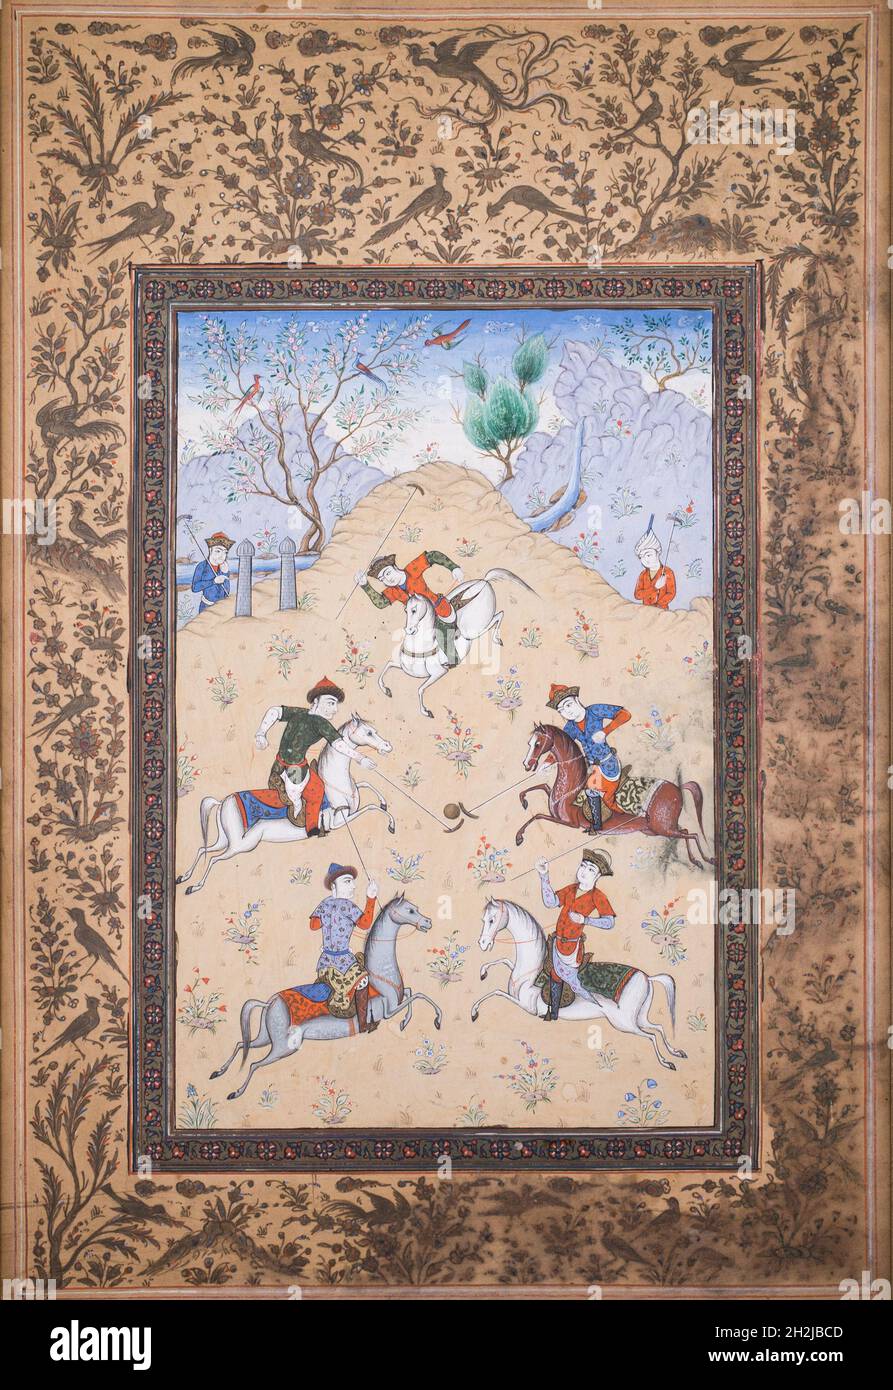 Antique Persian Miniature Painting of Chovgan Polo Game. Folio from ‘Guy O Chaugan’ by Arifi. 19th century Stock Photo